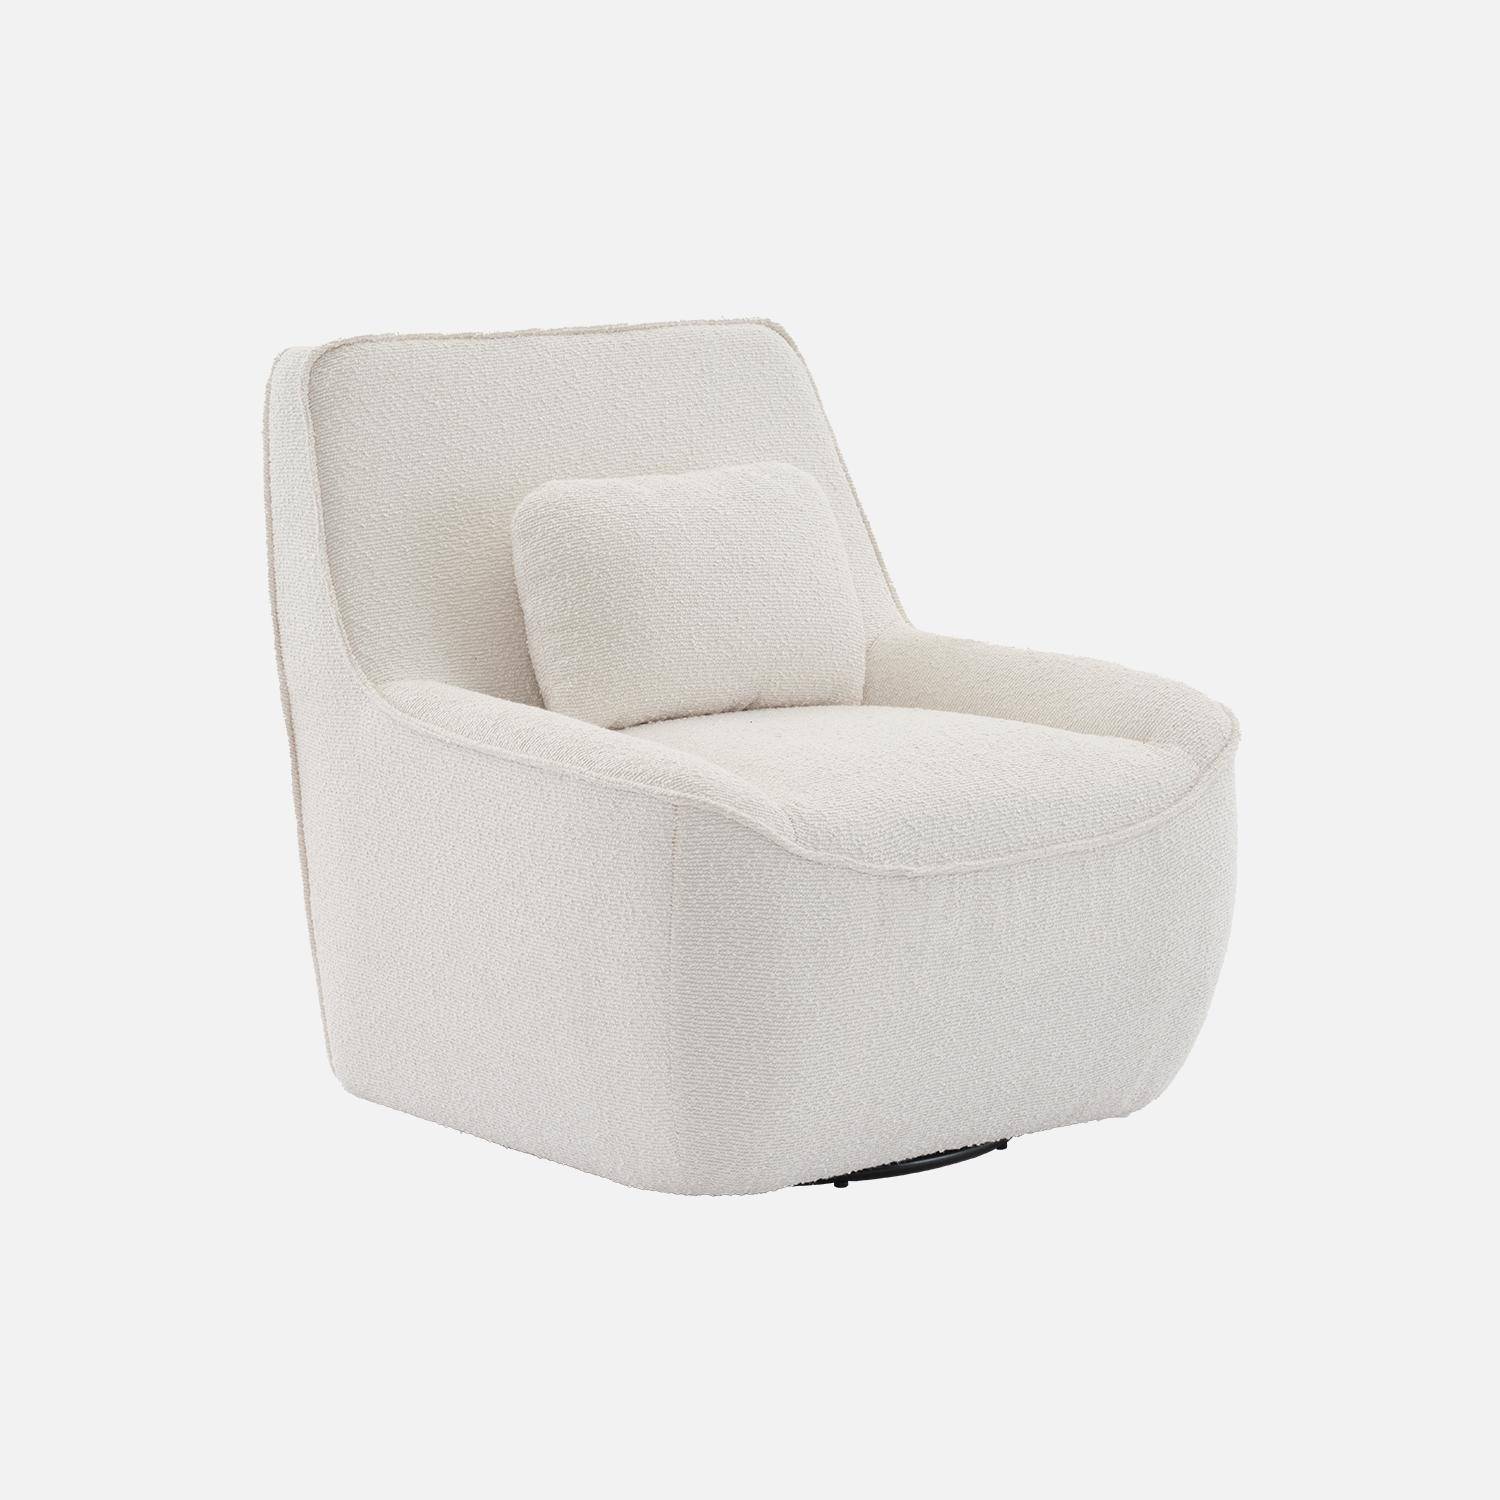 360° draaibare fauteuil in wit bouclé afneembaar kussen, Lounge, B 83 x D 83 x H 83cm,sweeek,Photo1